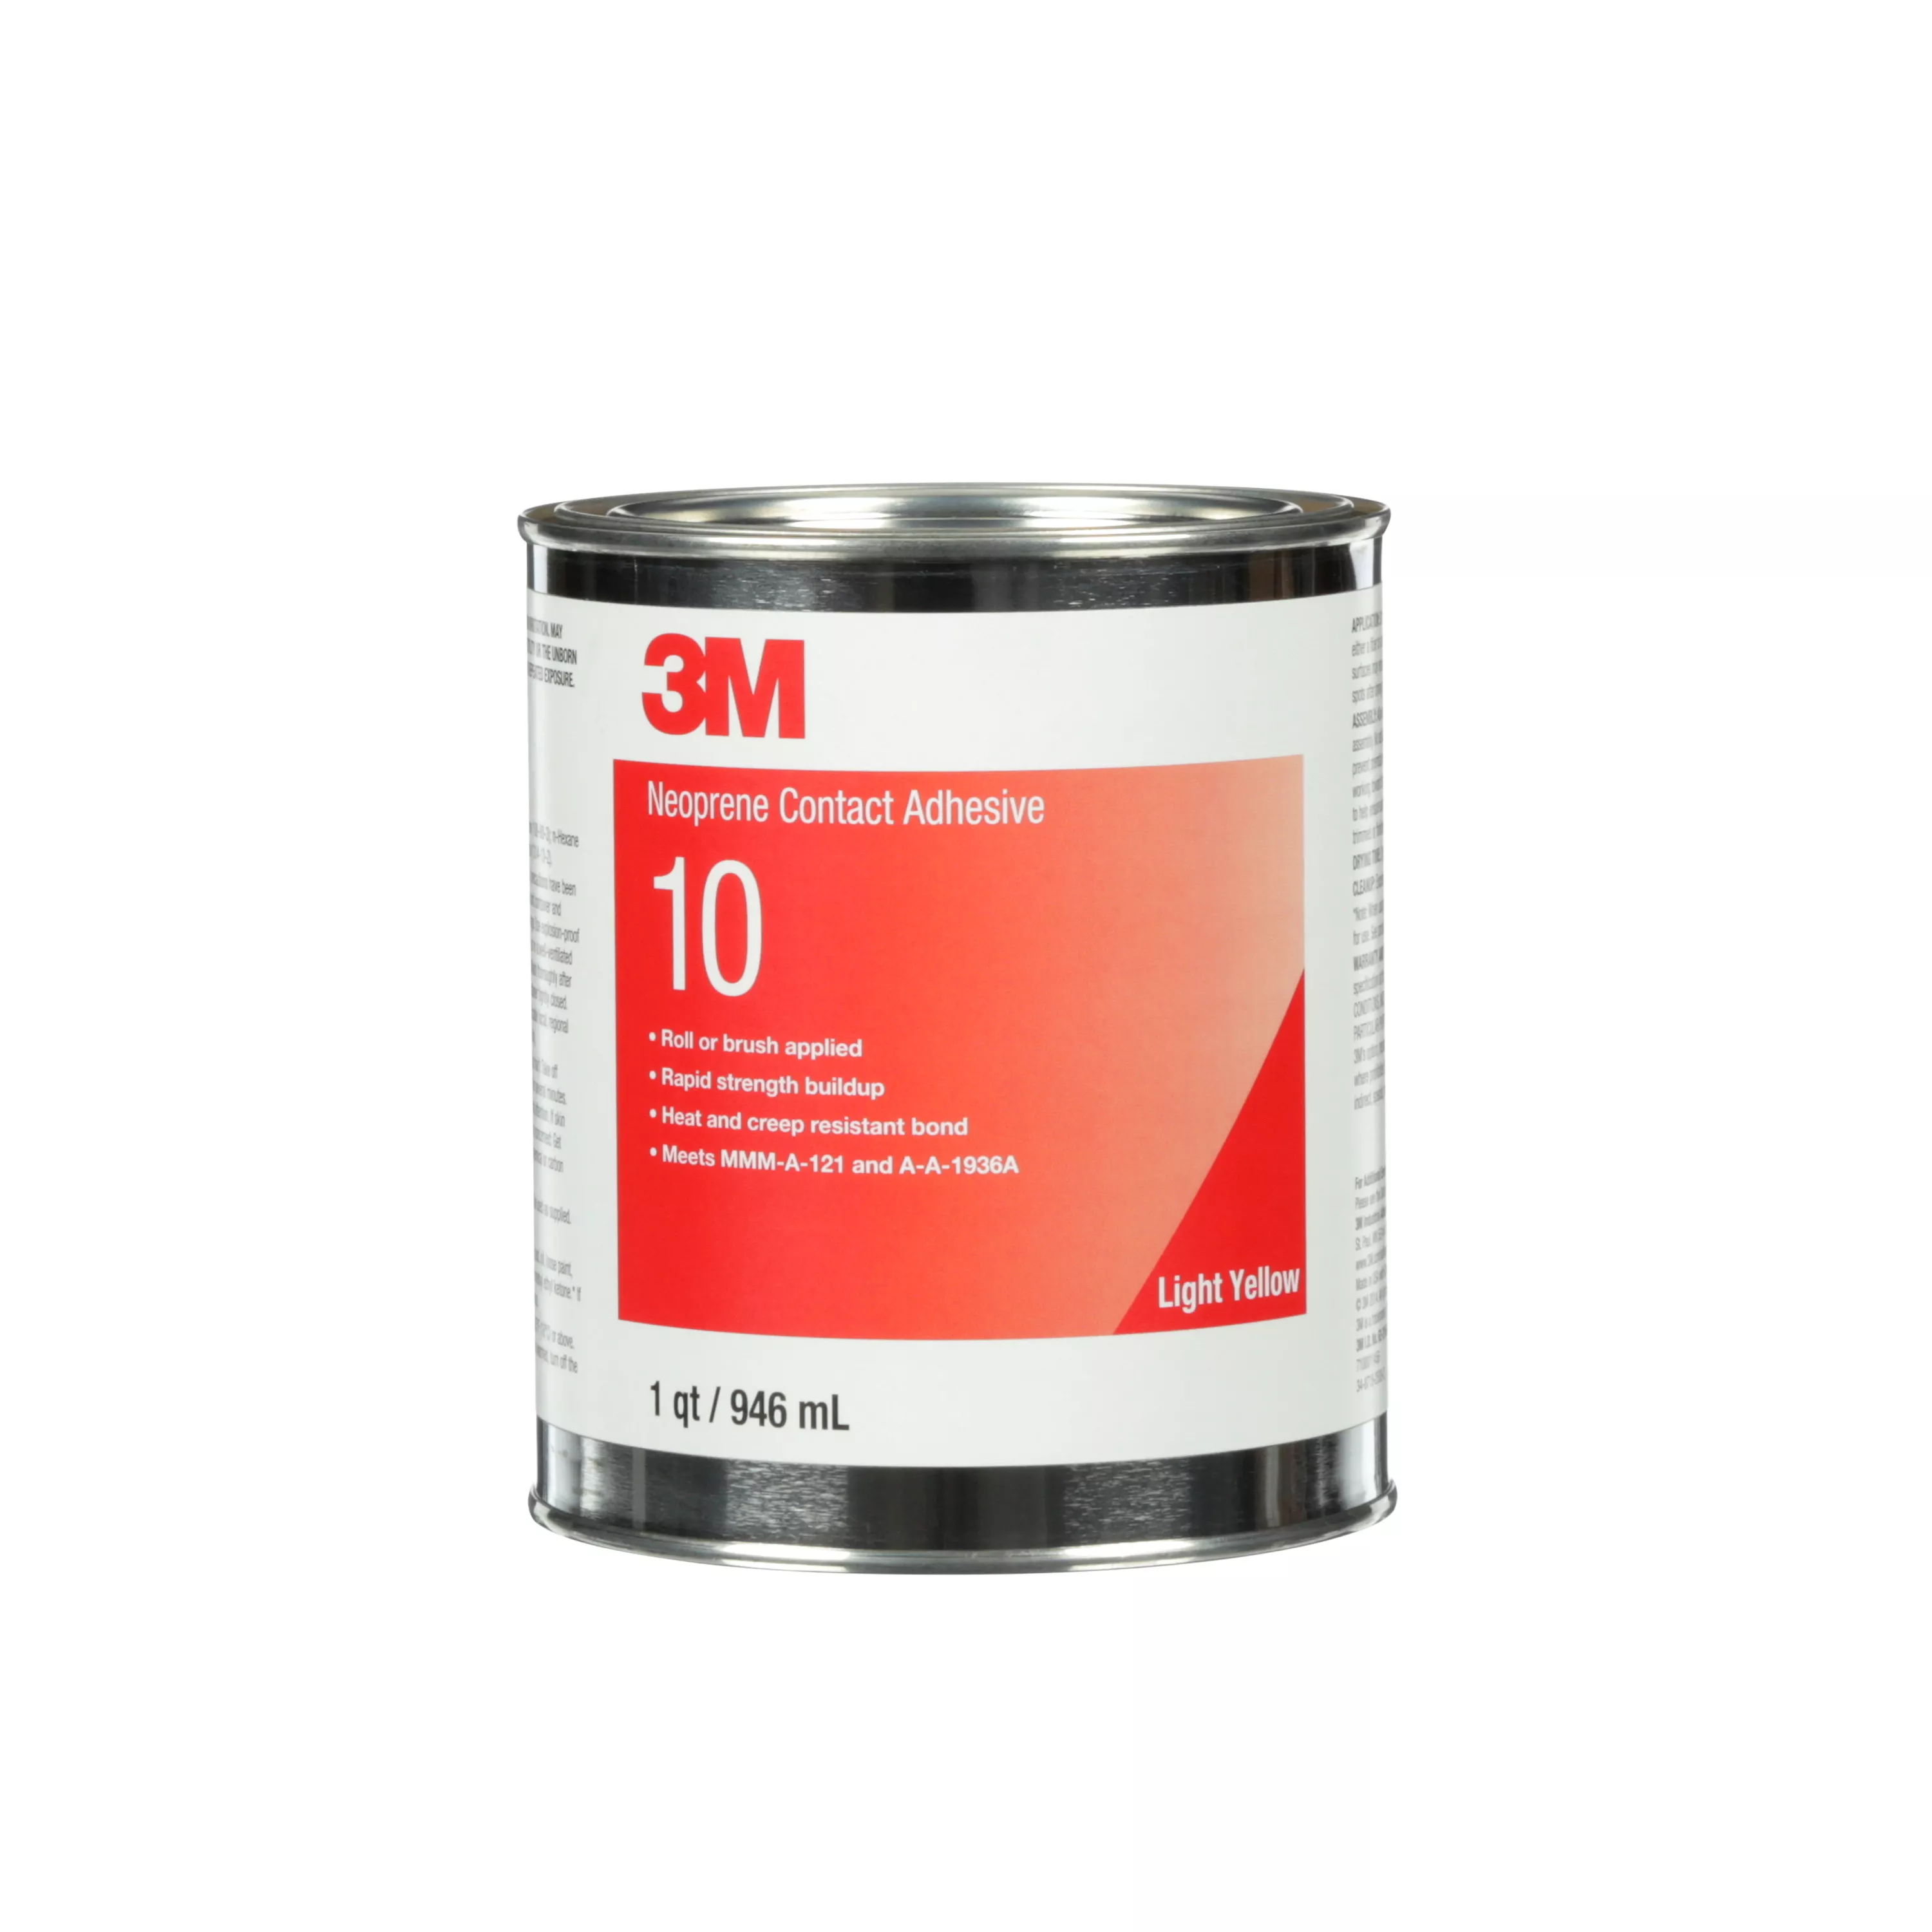 SKU 7100011456 | 3M™ Neoprene Contact Adhesive 10